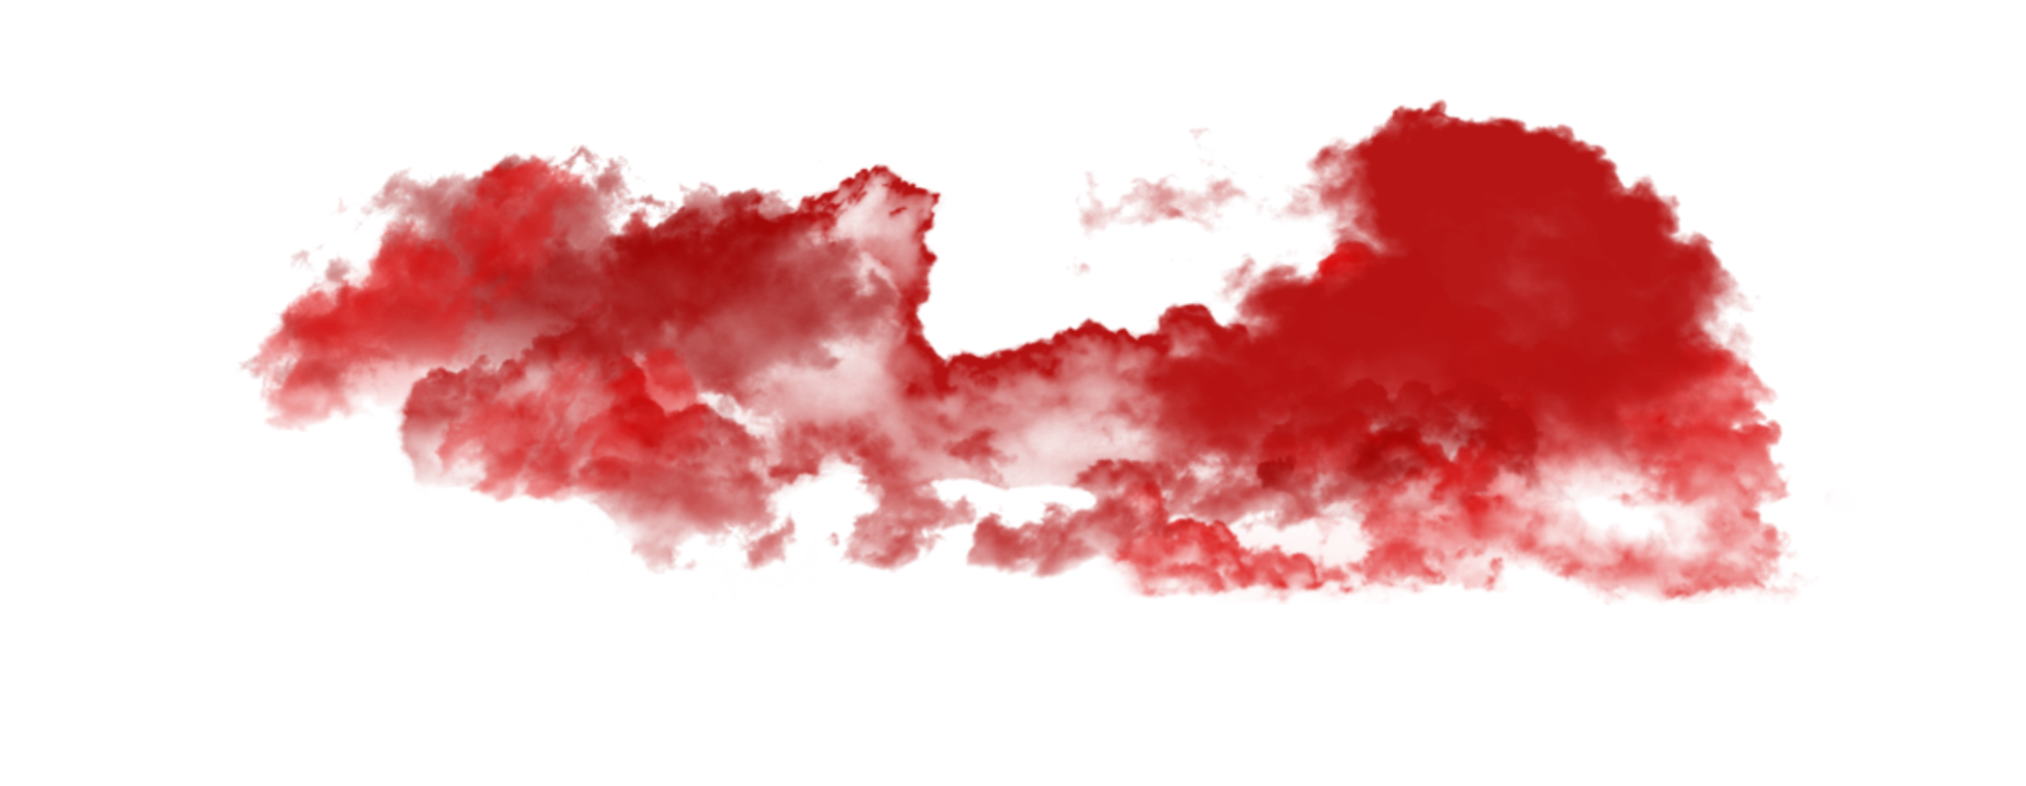 Imagen de PNG de humo rojo